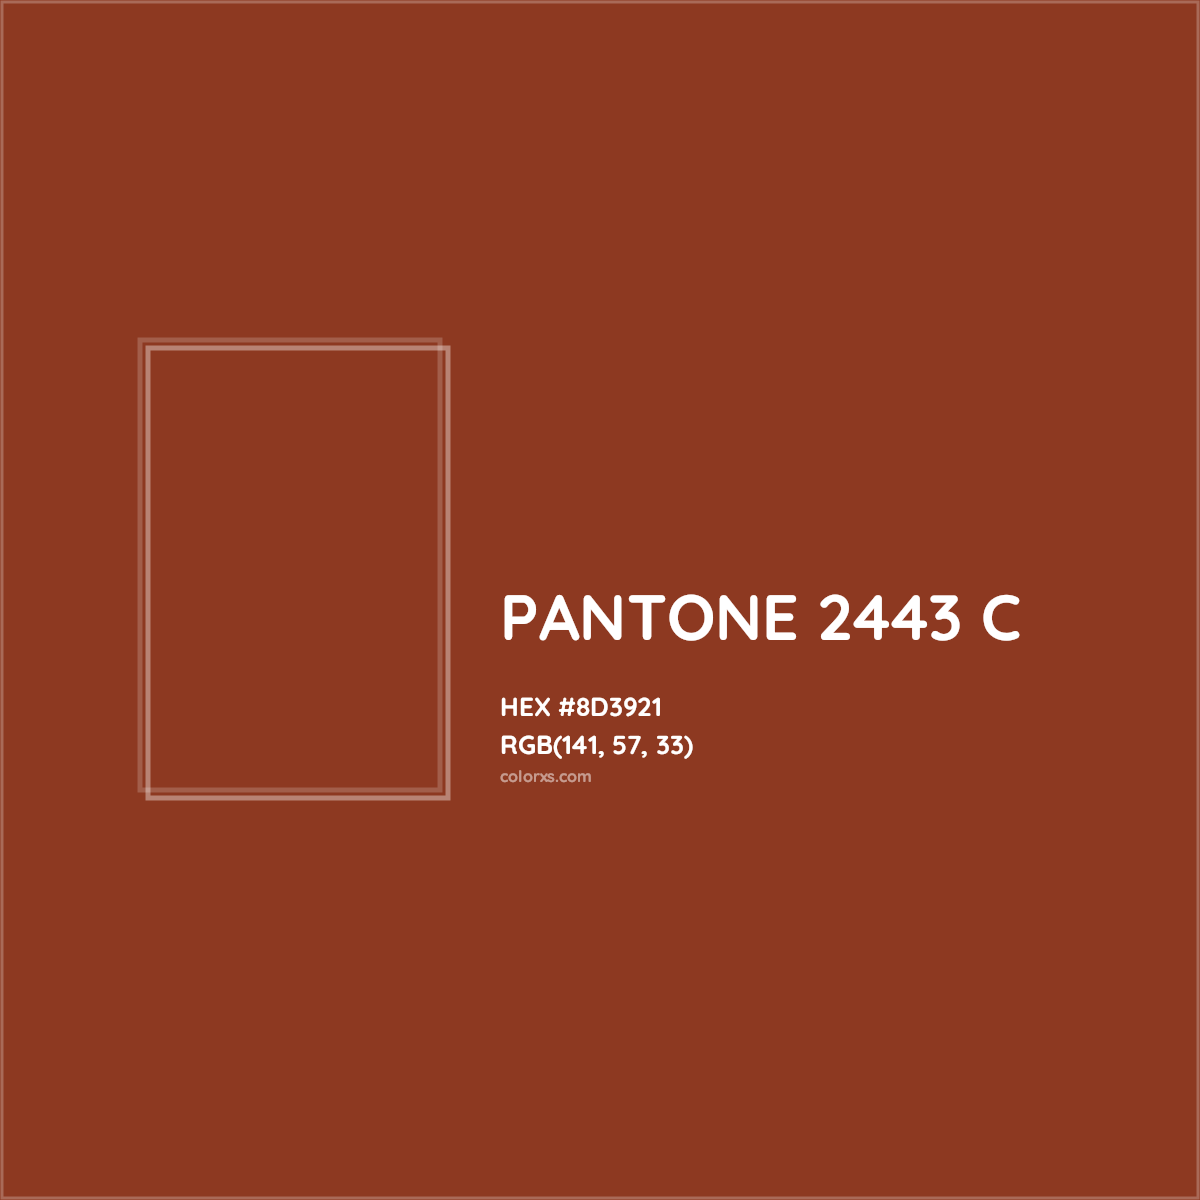 HEX #8D3921 PANTONE 2443 C CMS Pantone PMS - Color Code